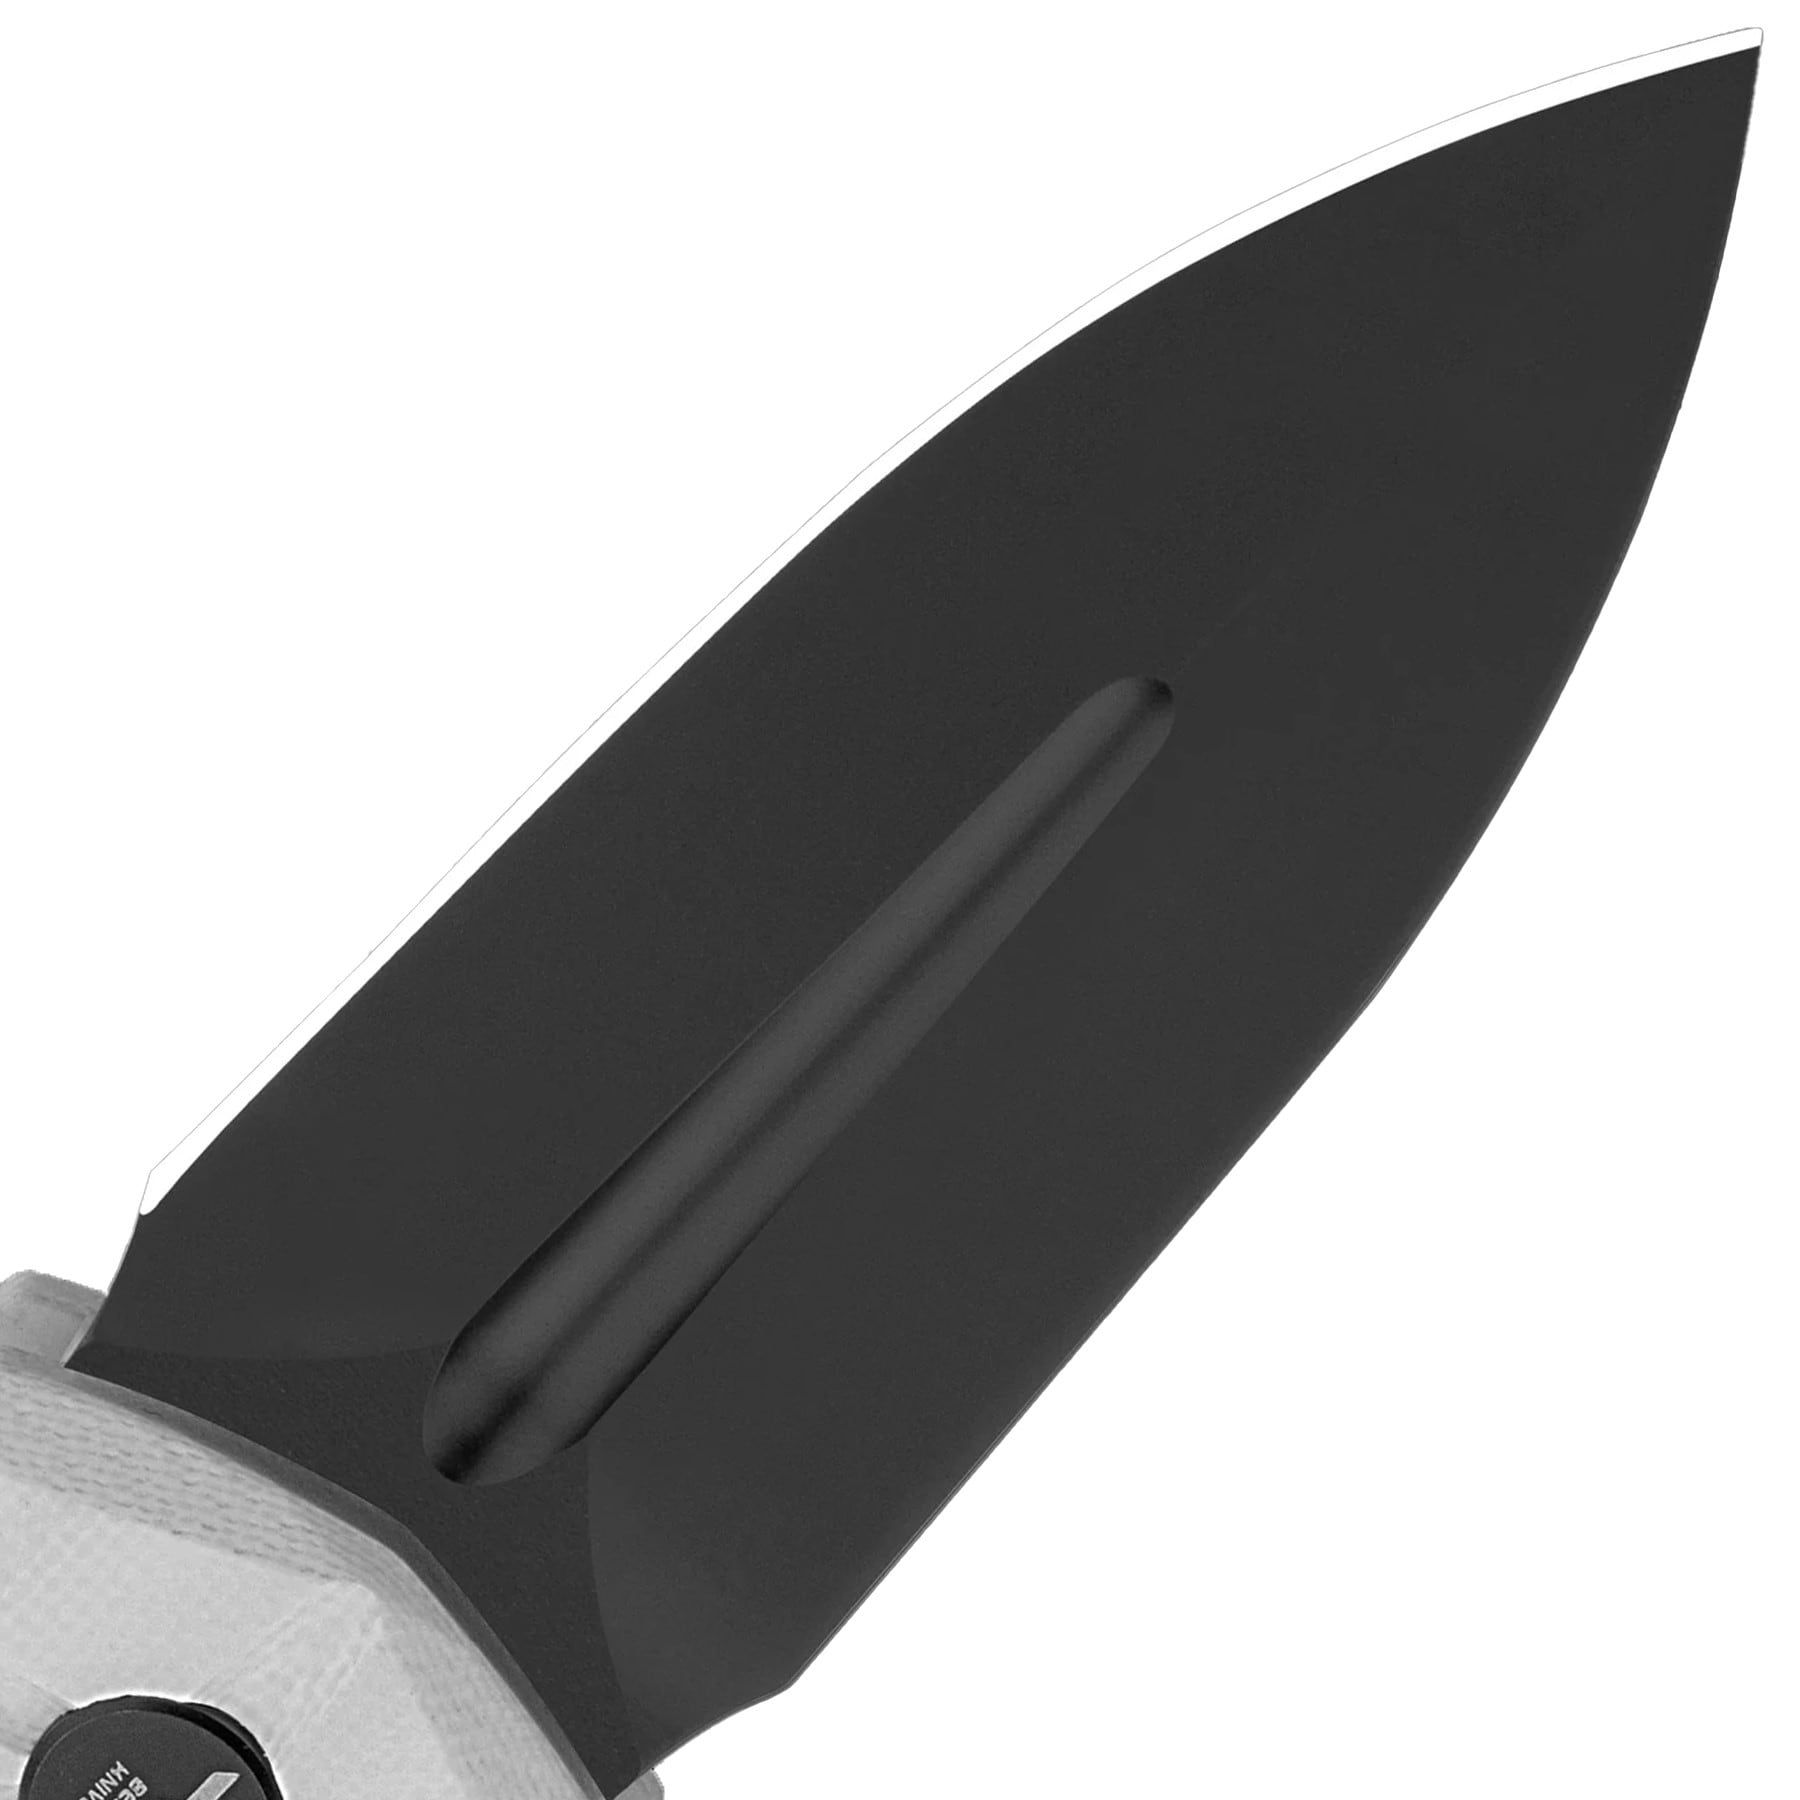 Nóż składany Bestech Knives QUQU G10 - White
